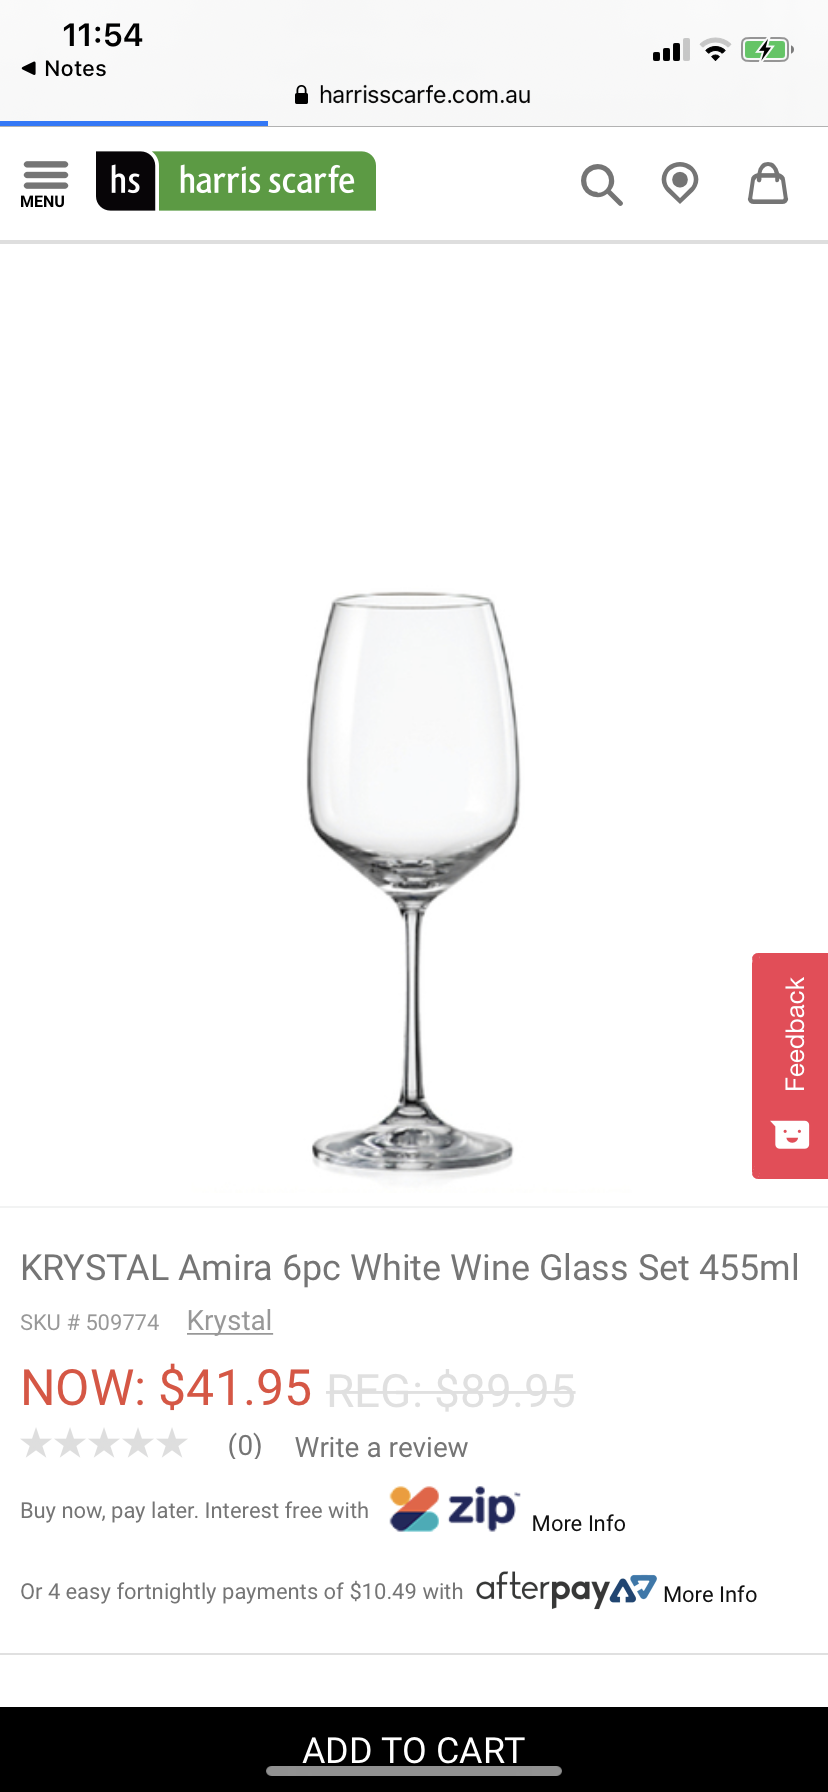 KRYSTAL Amira 6pc White Wine Glass Set 455ml